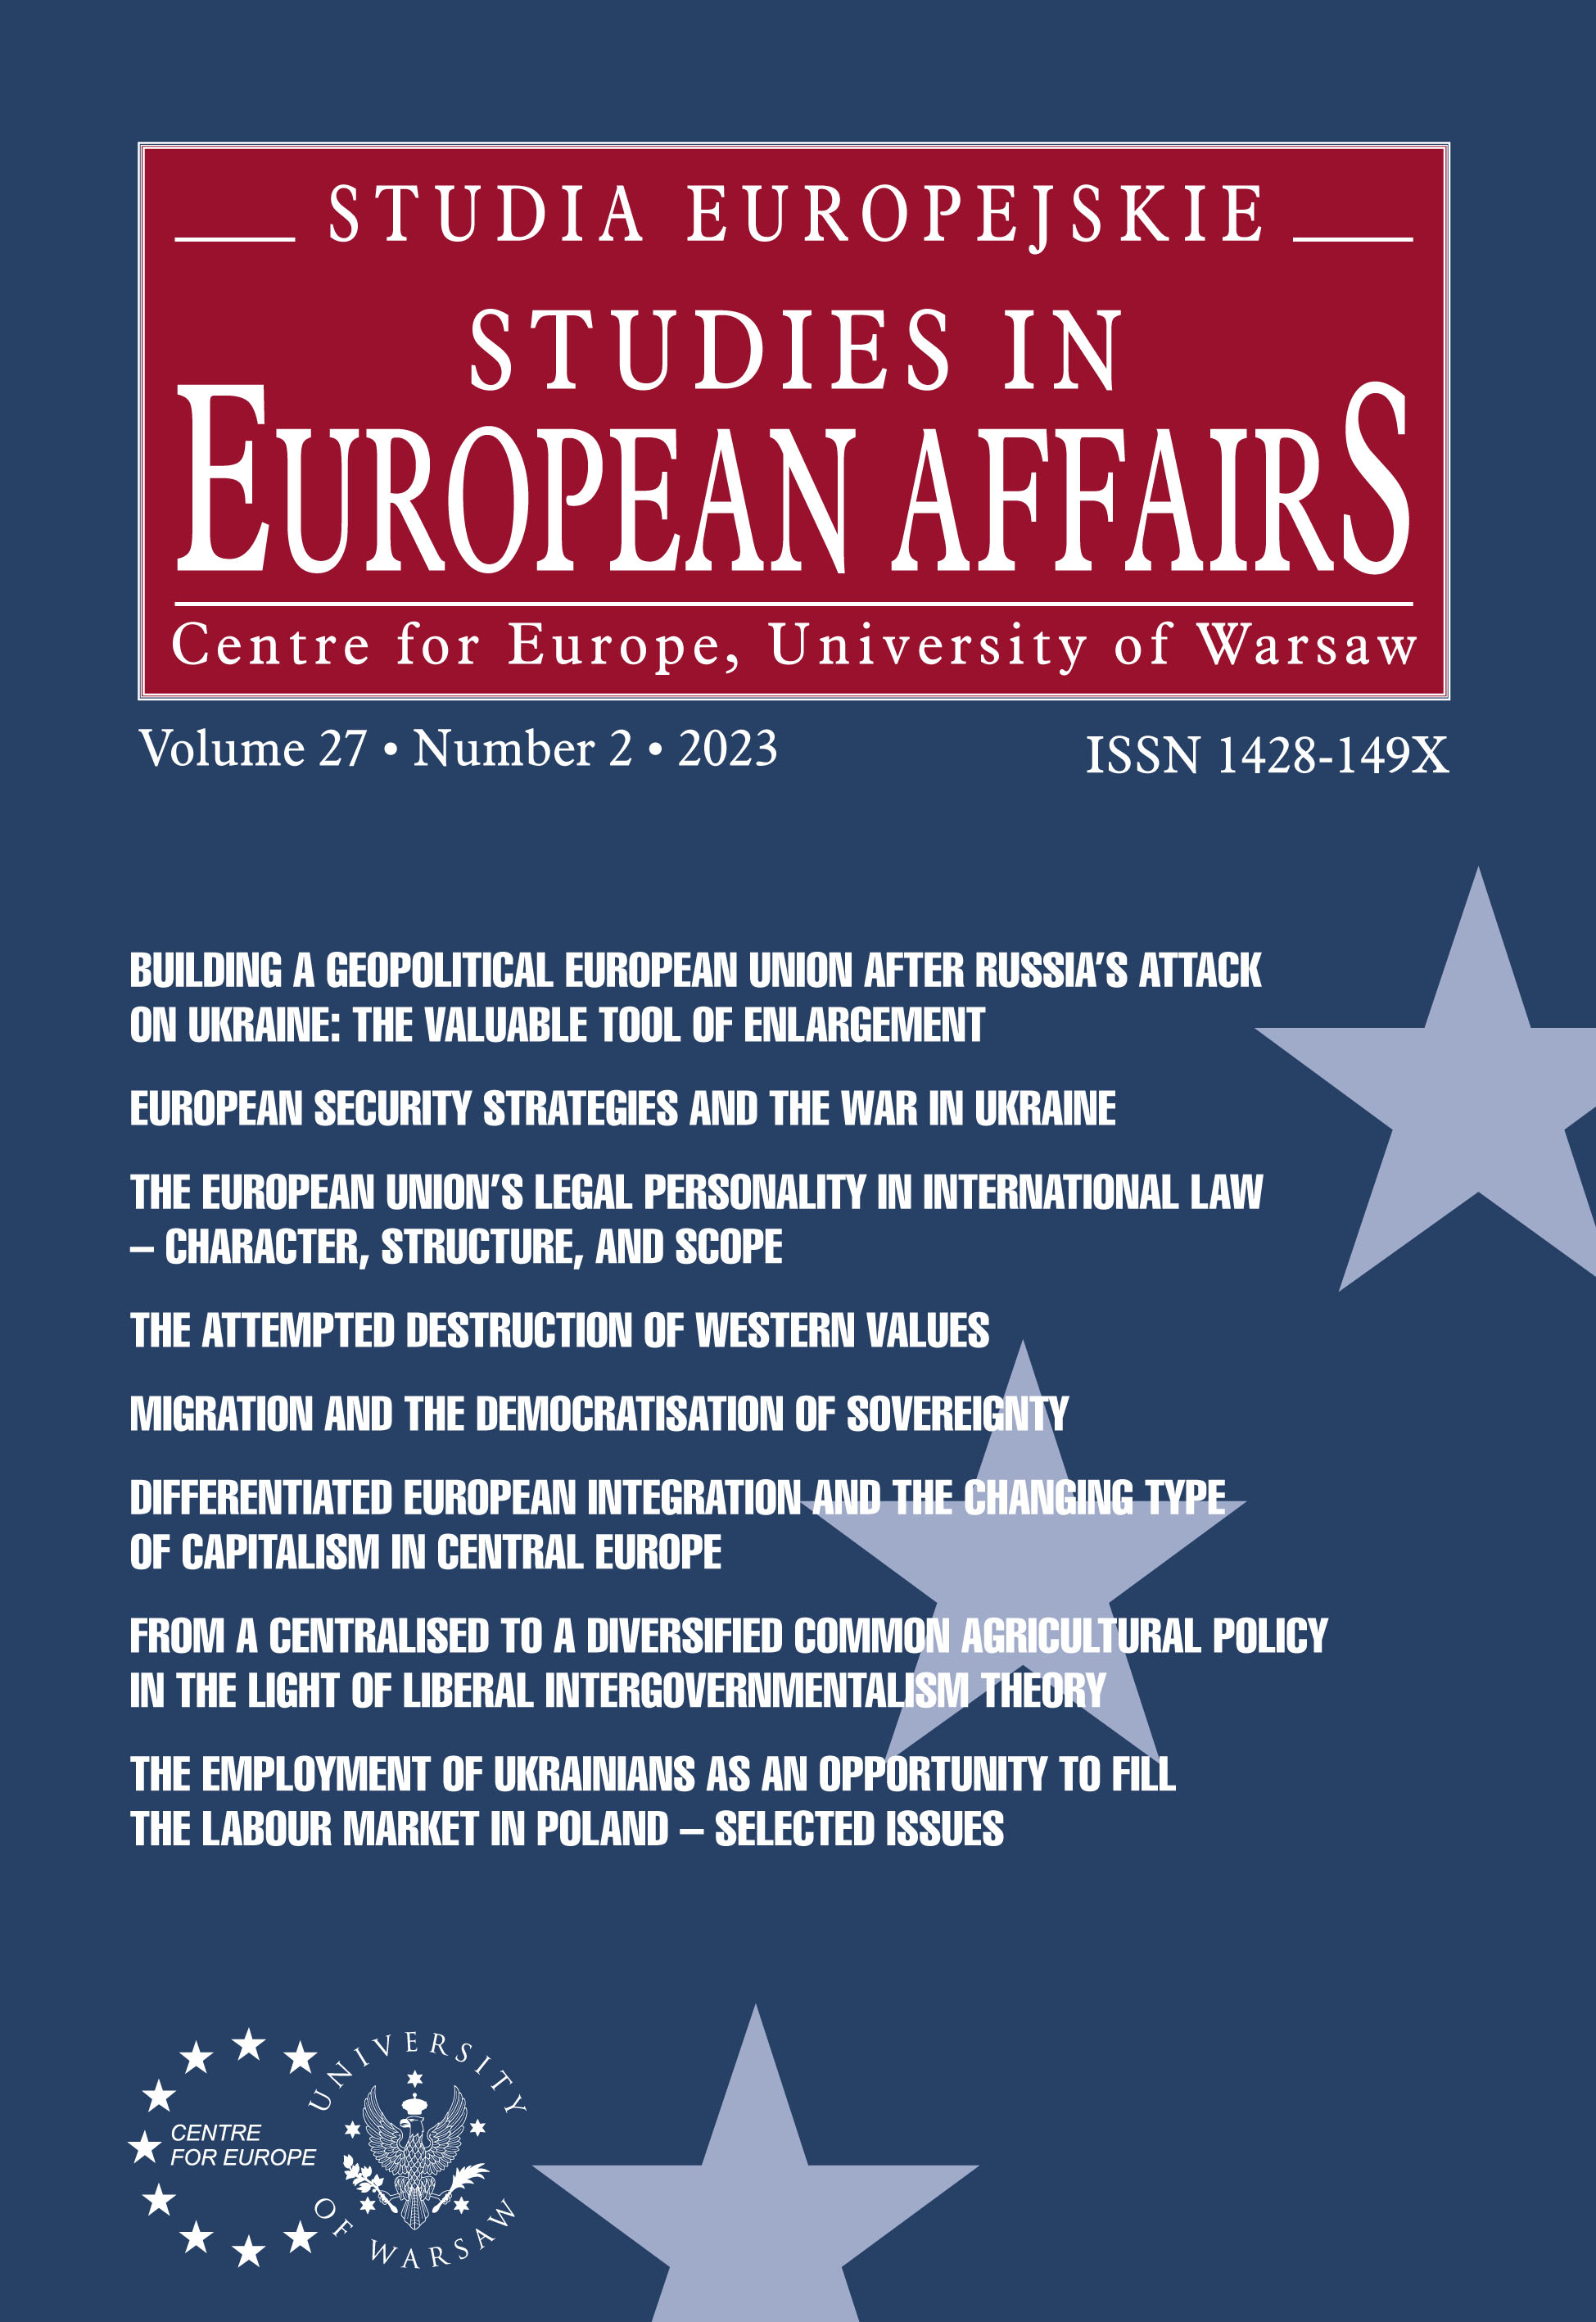 European Security Strategies and the War in Ukraine